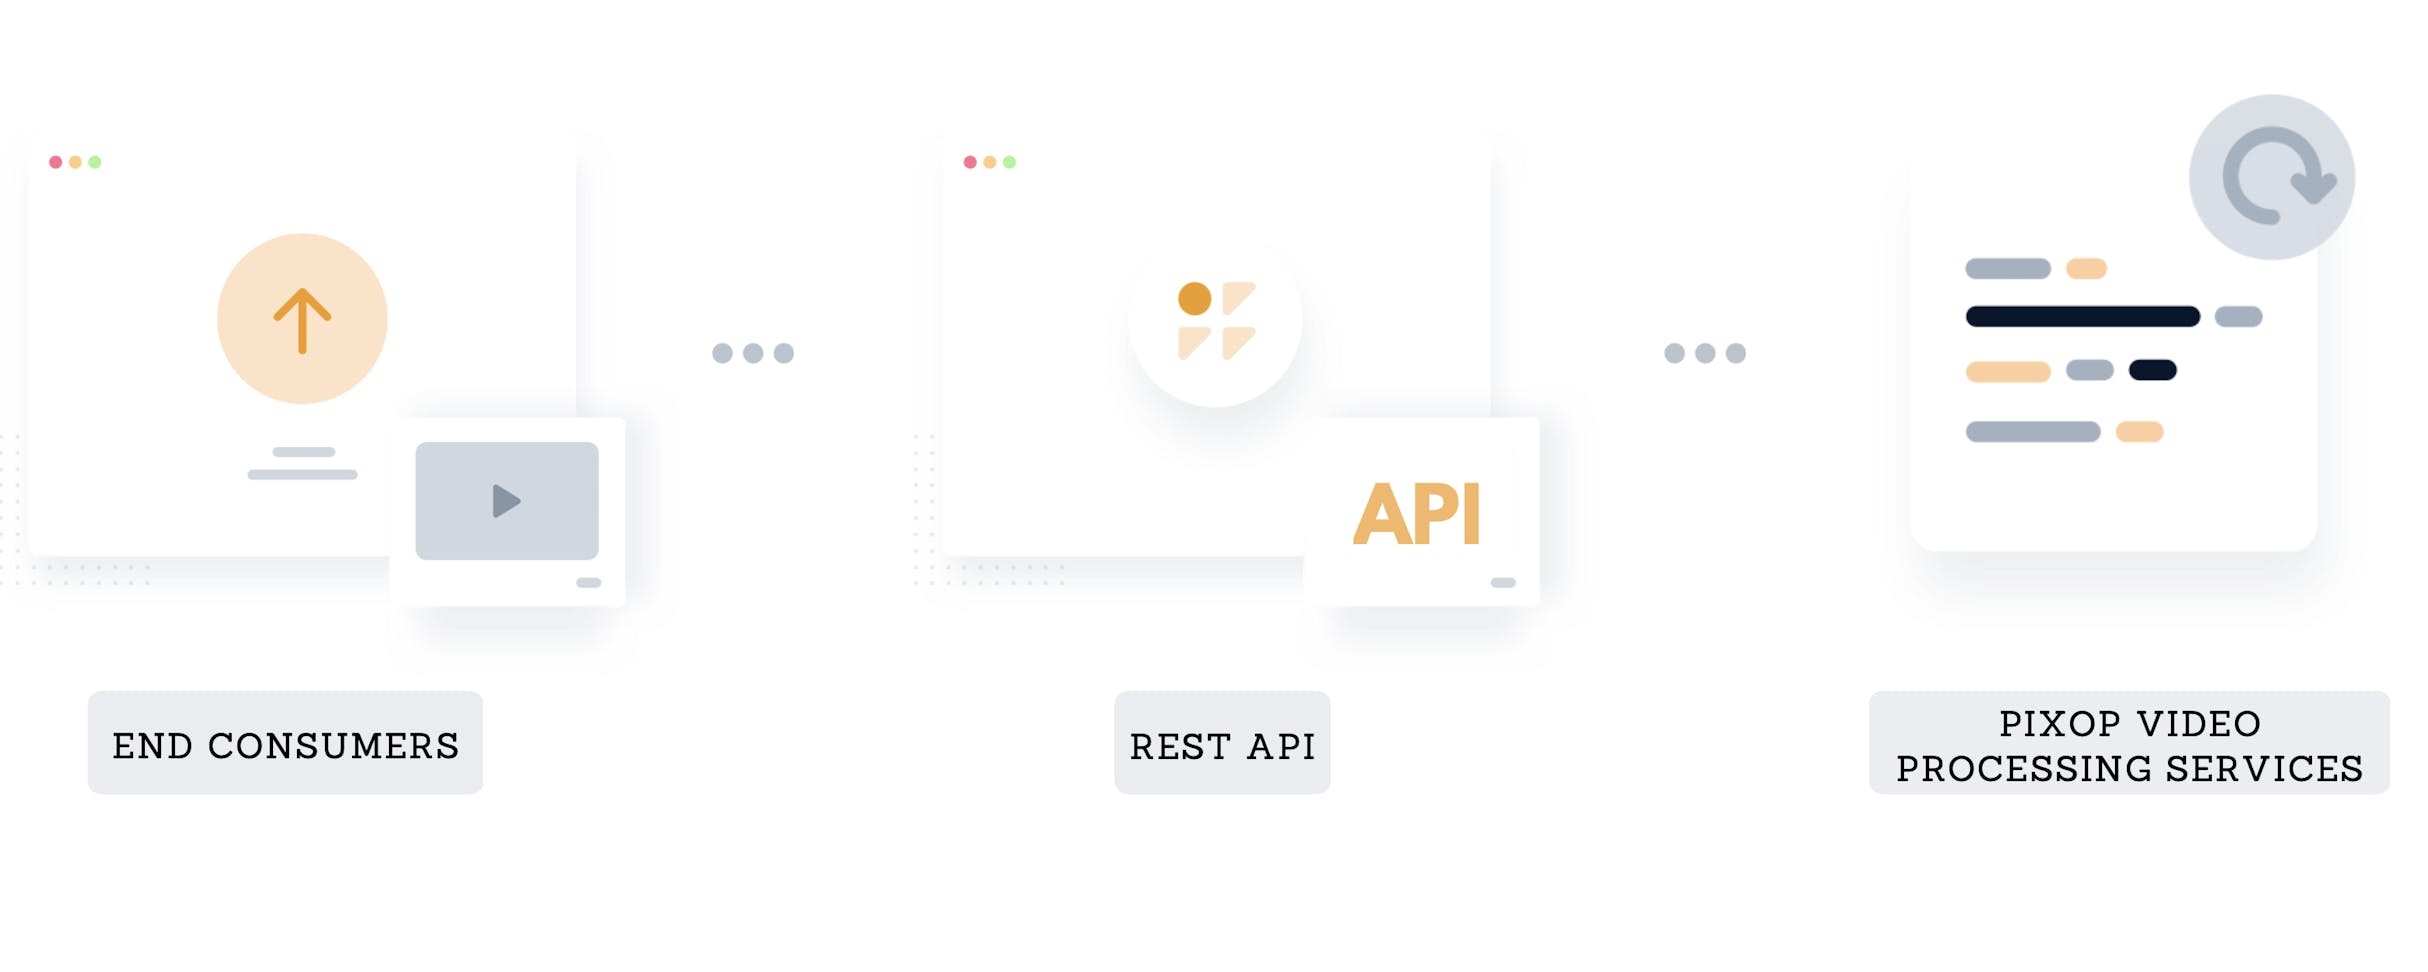 Graphic illustration of REST API flow 